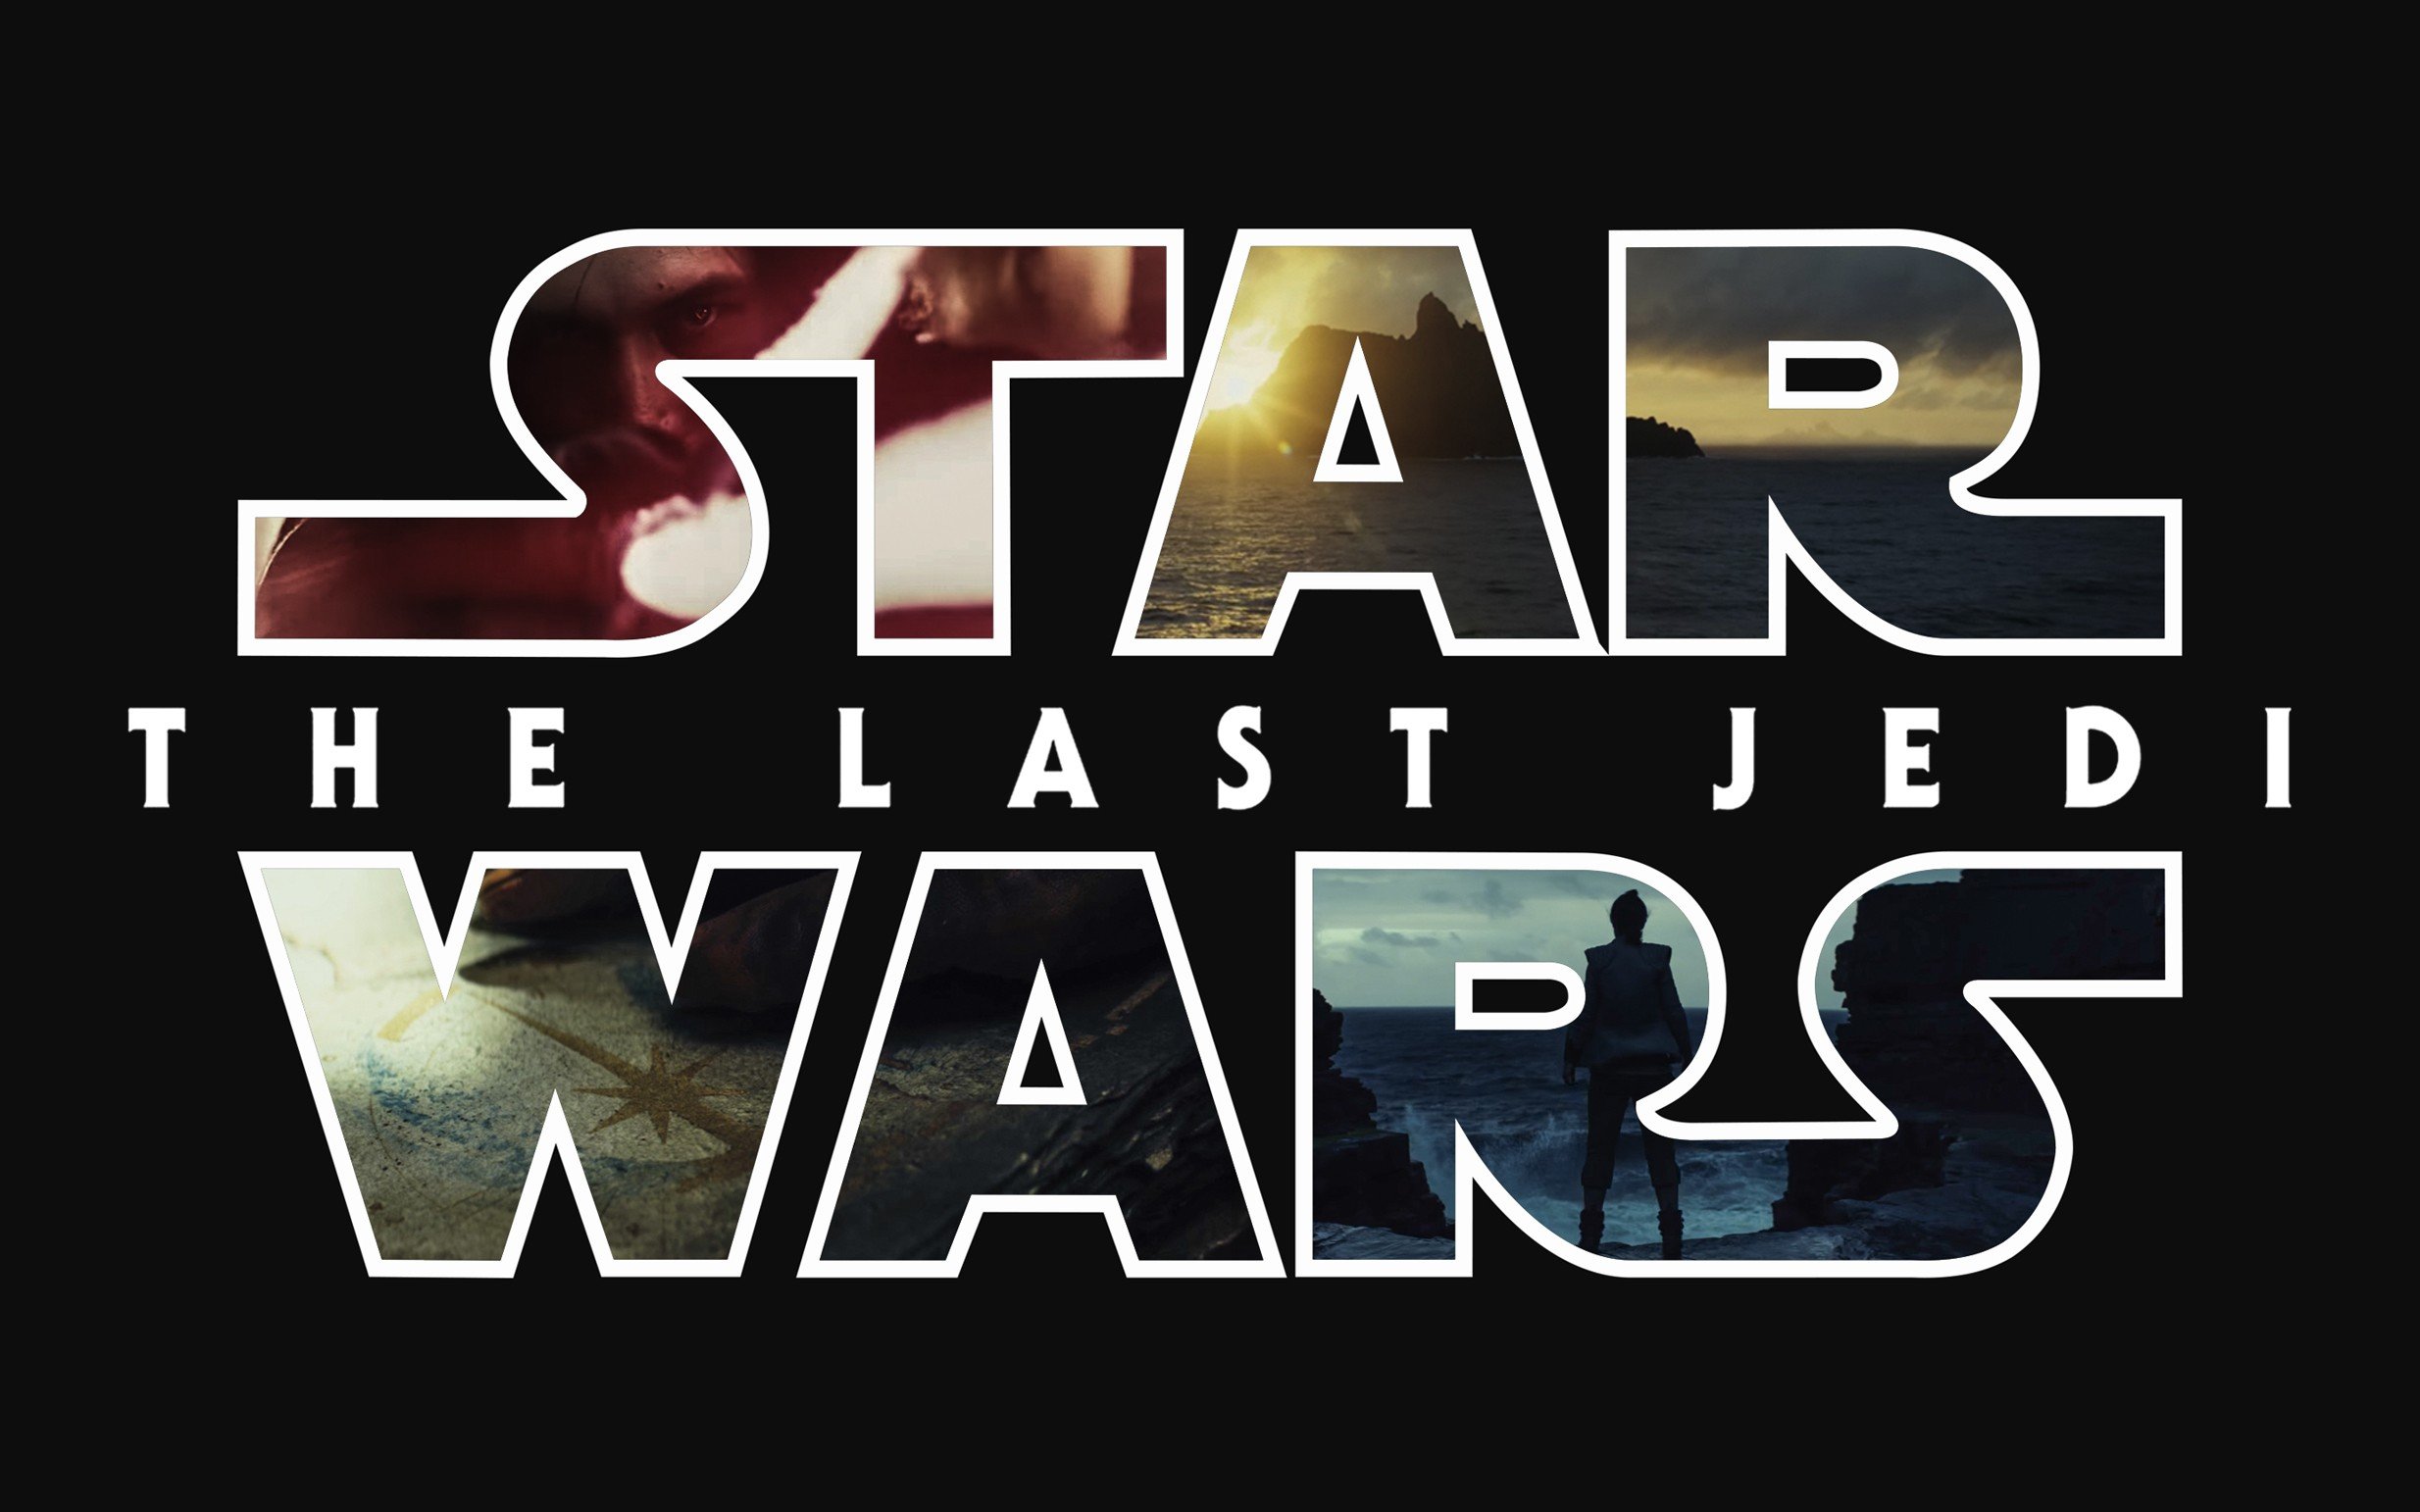 Star Wars: The Last Jedi, Star Wars, Typography, Black background Wallpaper